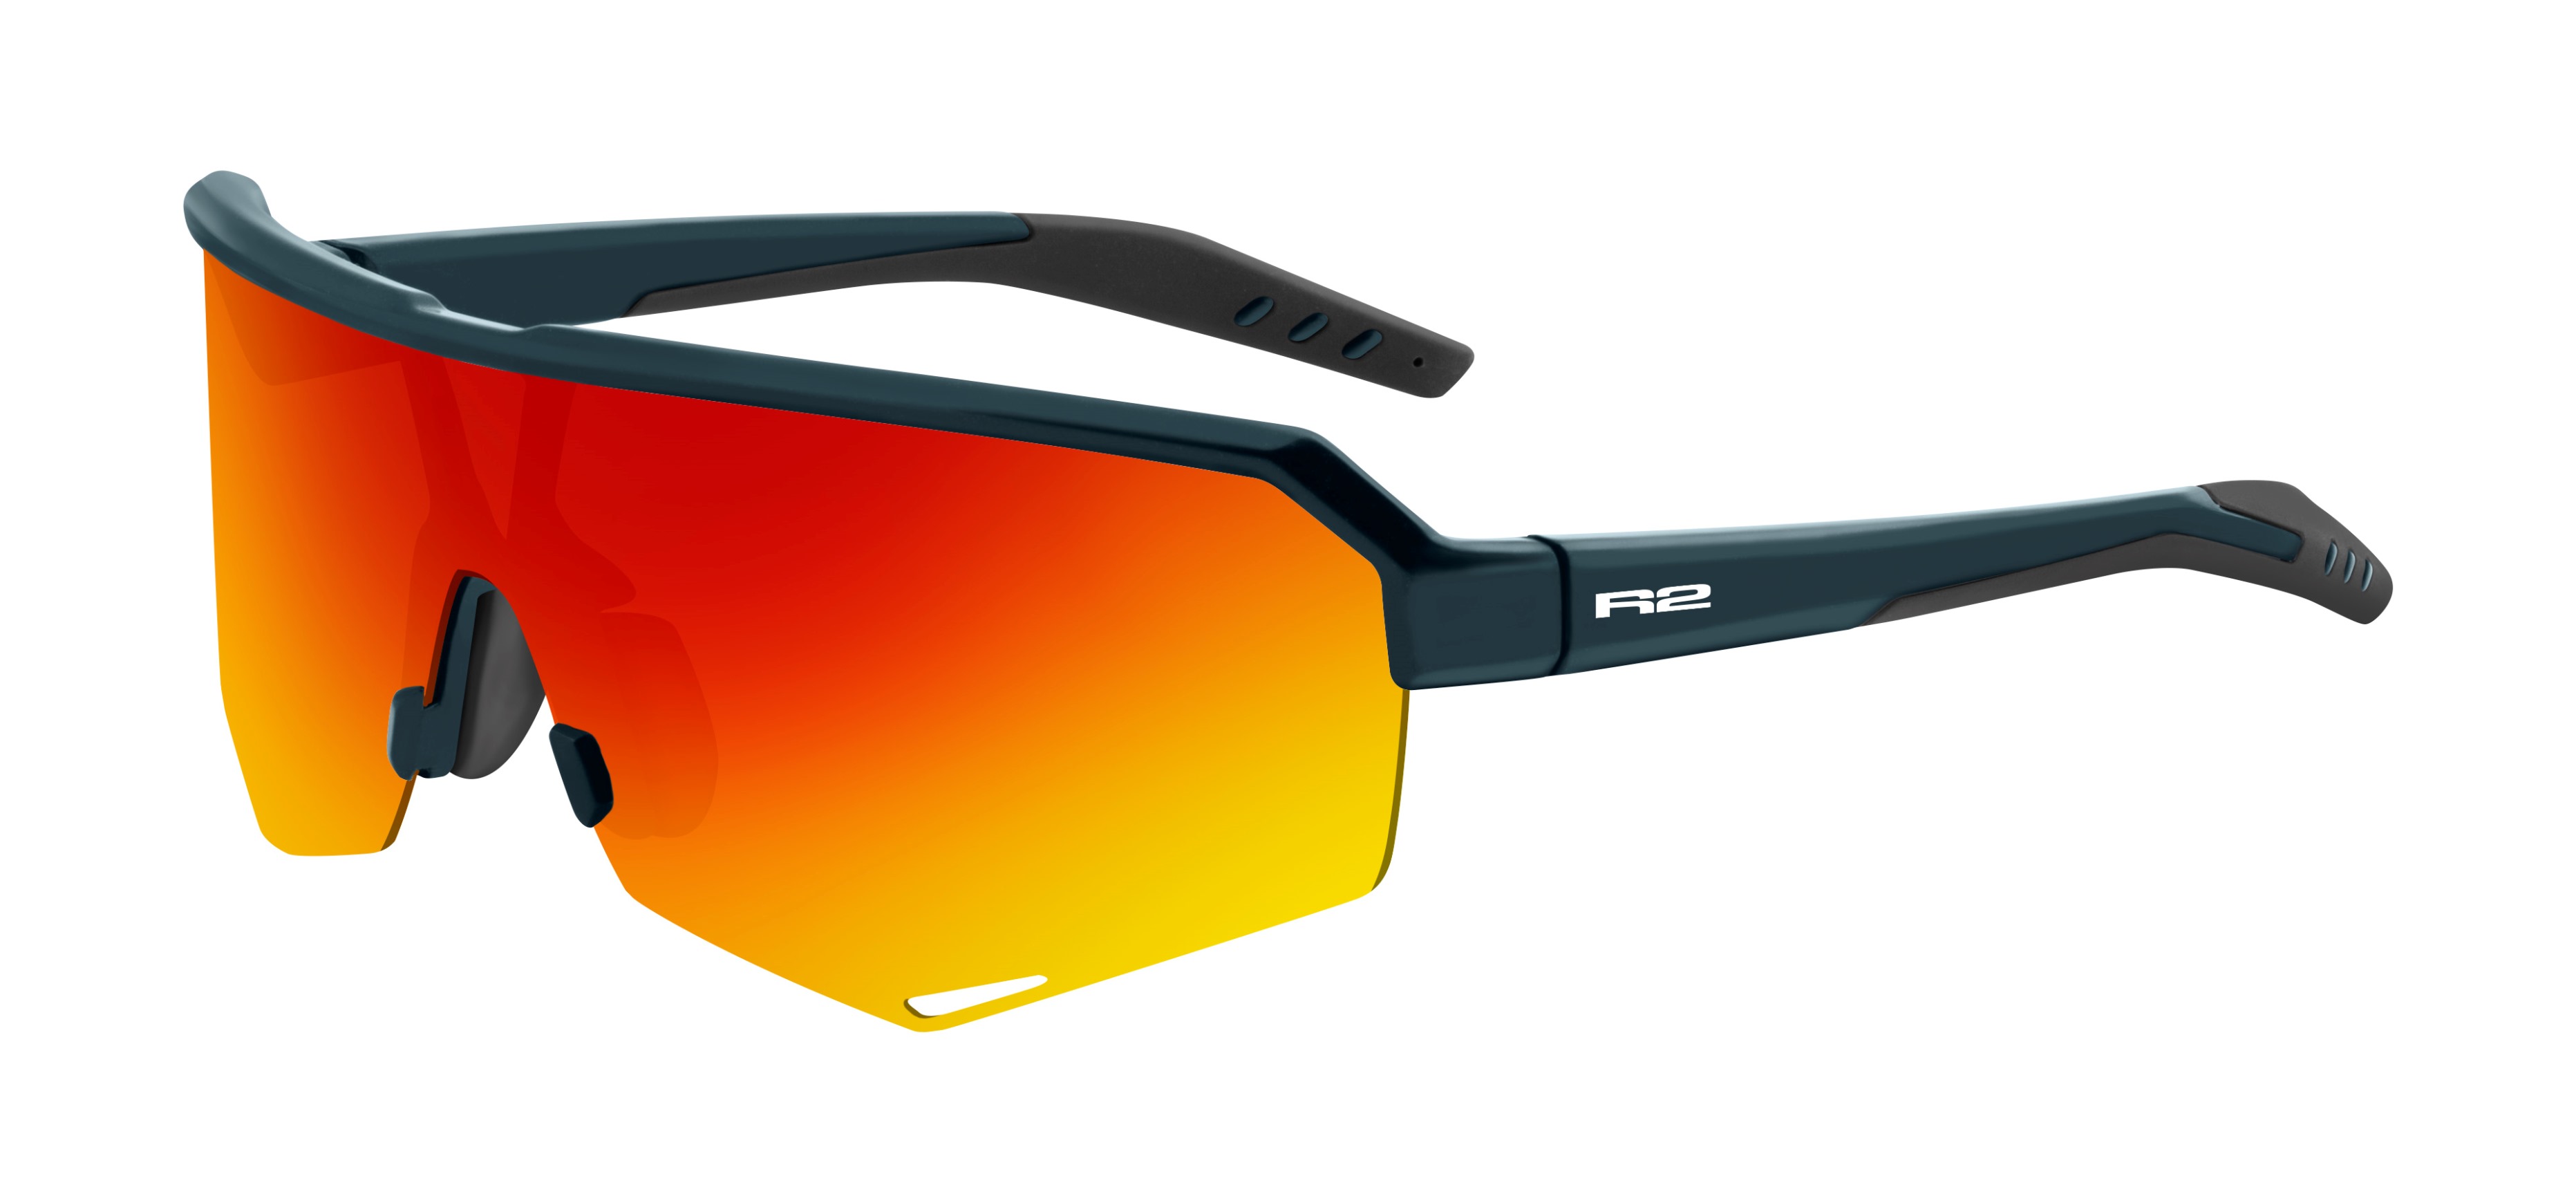 Sport sunglasses R2 FLUKE AT100F standard